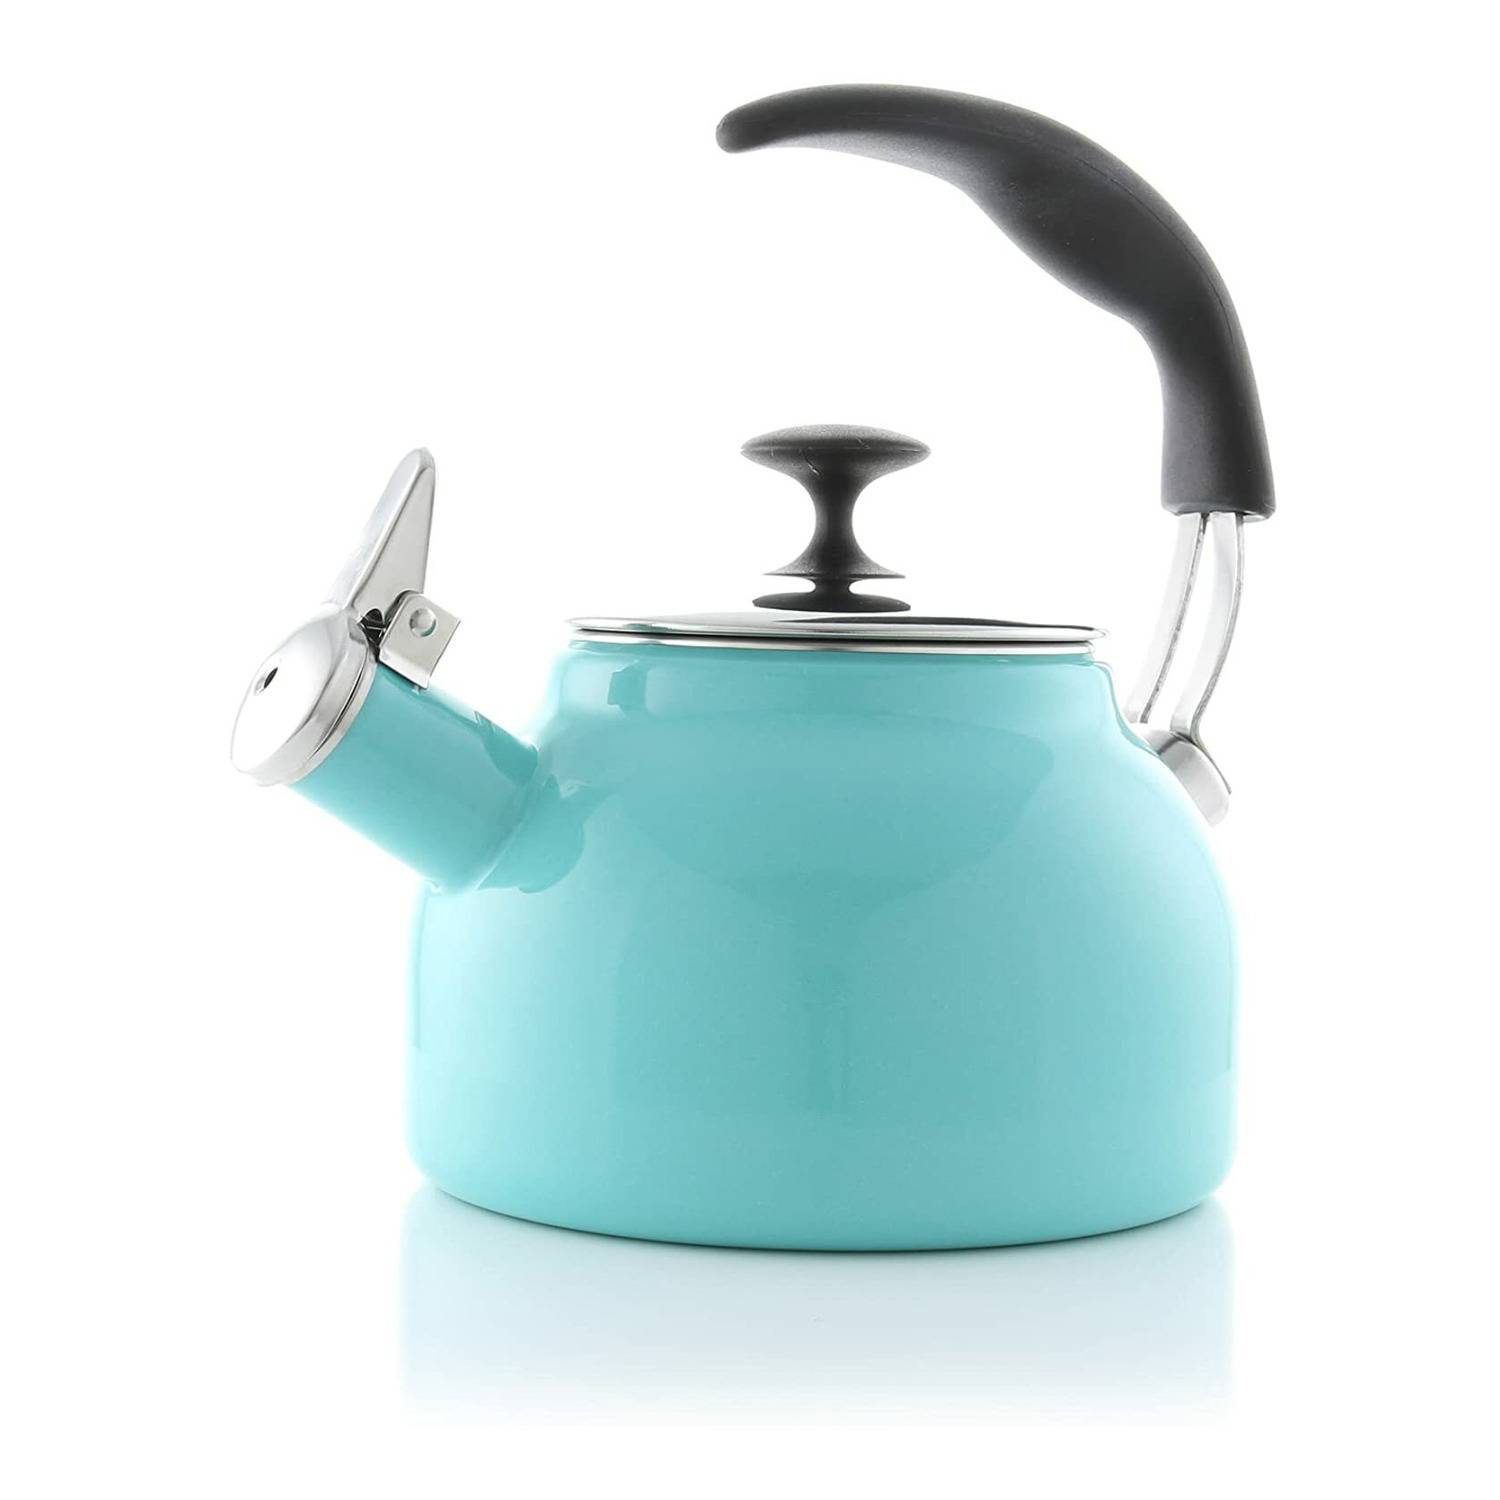 Chantal Ceylon Enamel-on-Steel Whistling Tea kettle (1.6-Quart, Aqua)